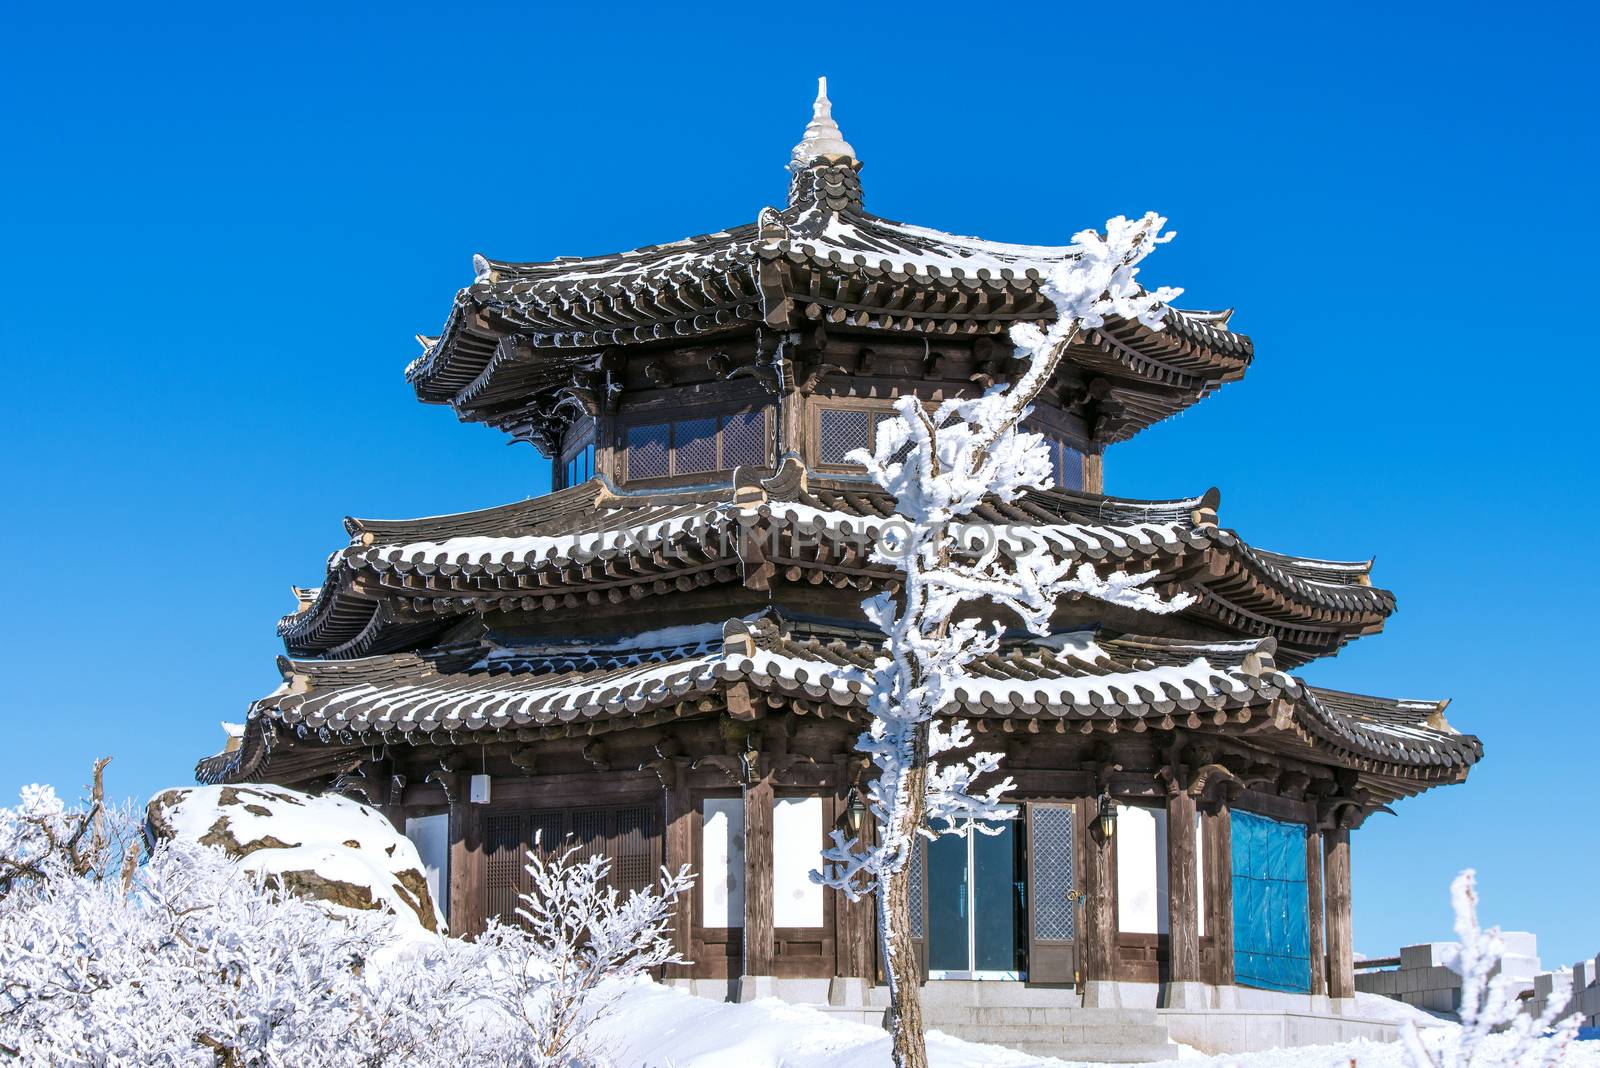 Deogyusan mountains in winter, Korea. by gutarphotoghaphy